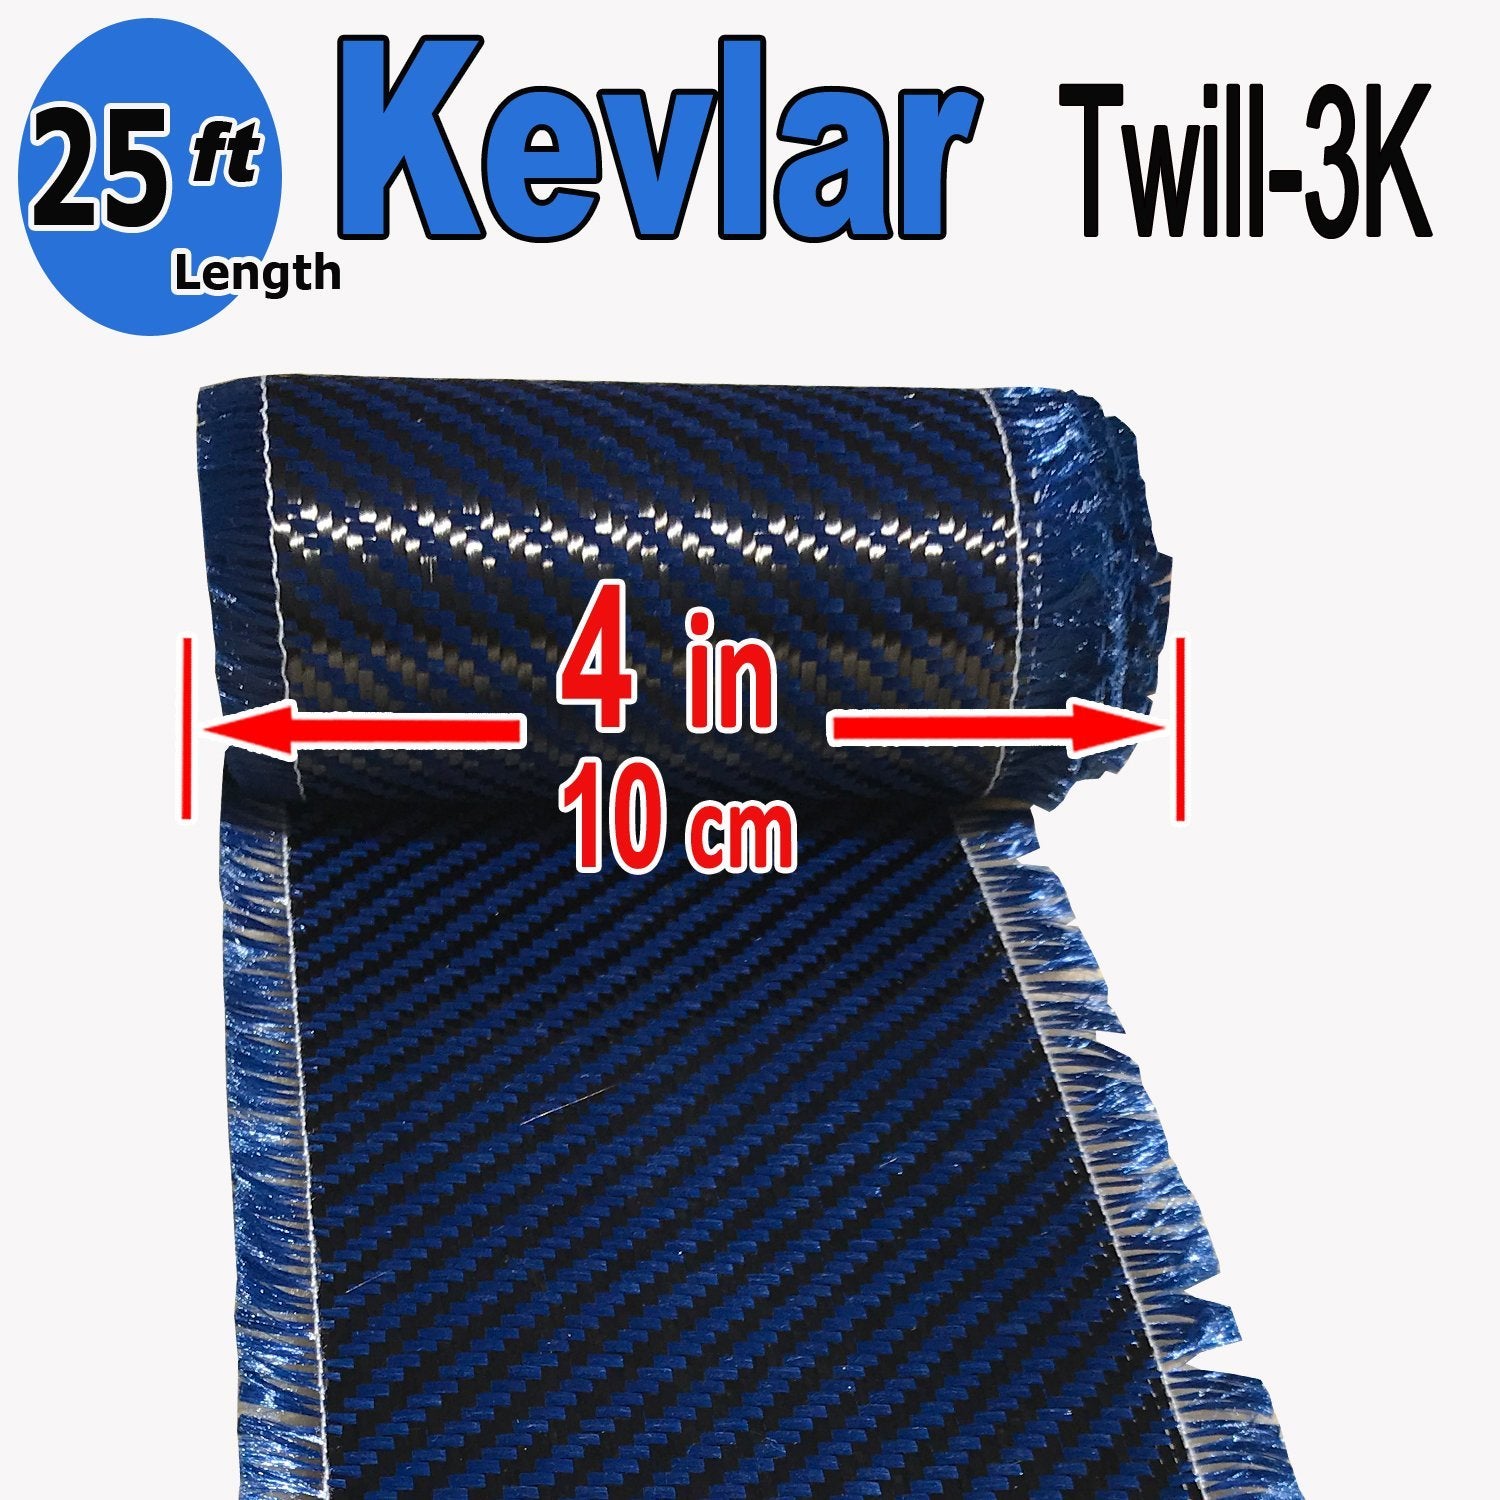  12 x 10 FT - Kevlar FABRIC-2x2 Twill WEAVE-3K/240g